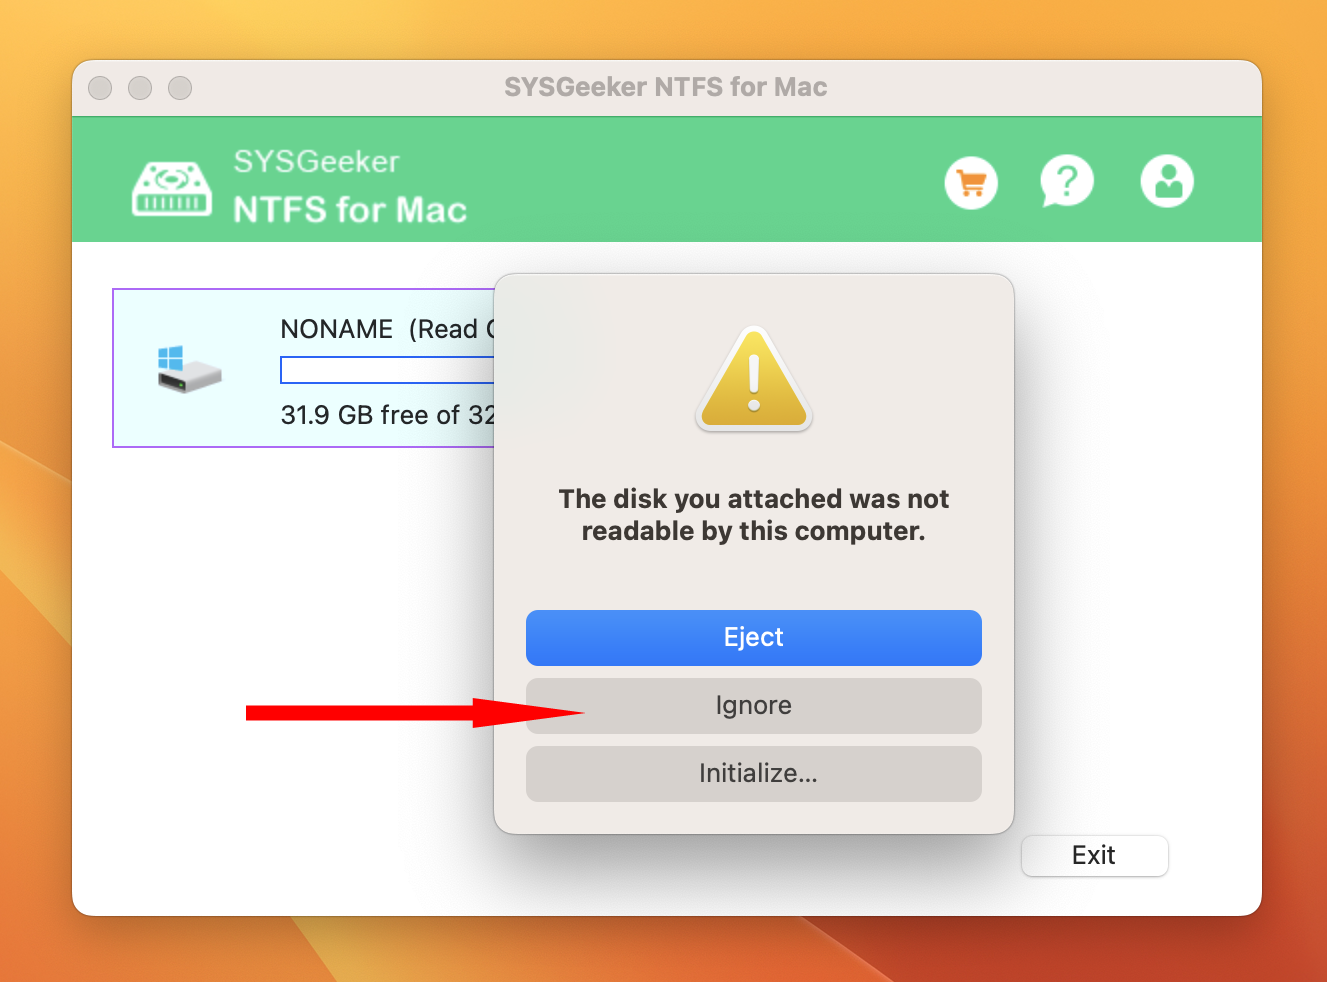 NTFS for Mac software